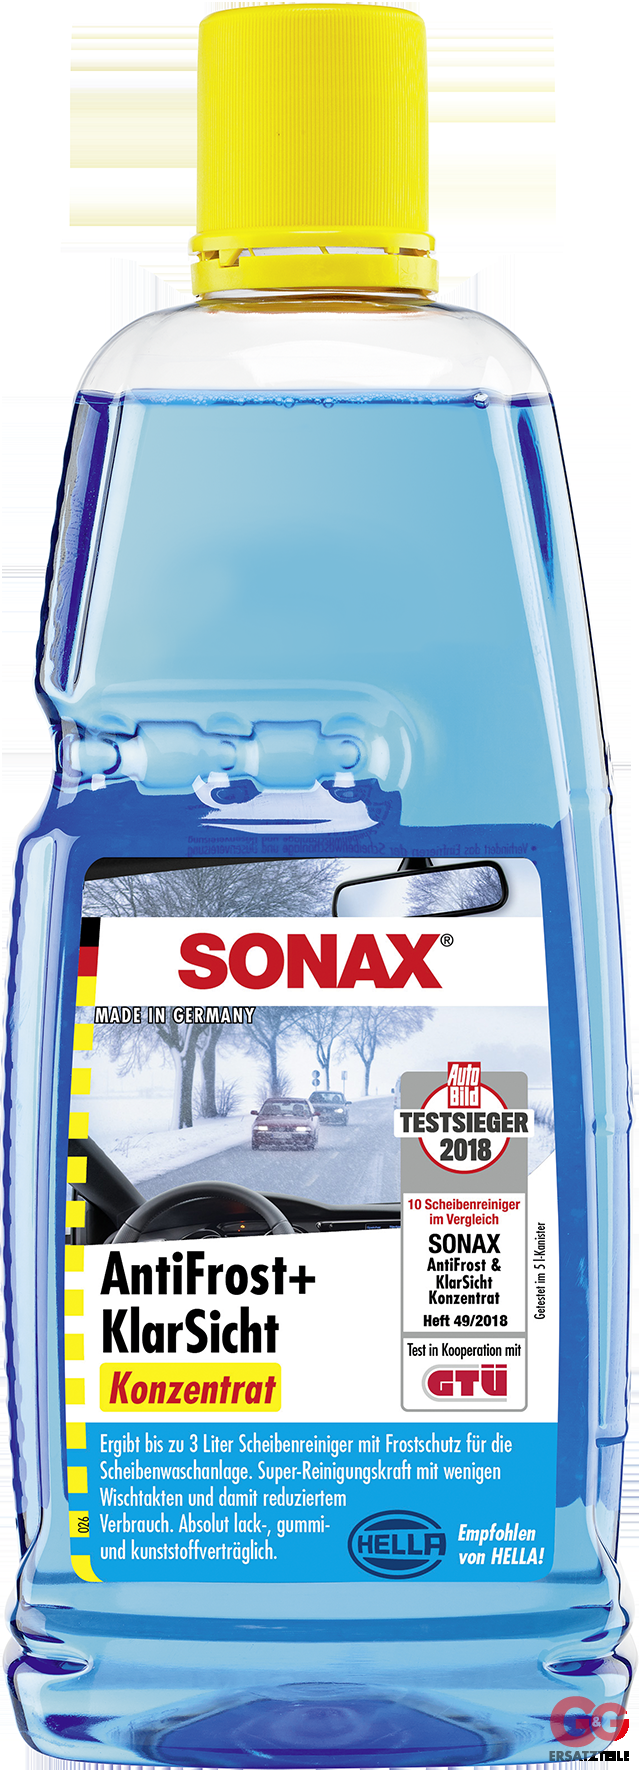 Sonax AntiFrost + KlarSicht Konzentrat Citrus 5 Liter - Detailing Prod,  16,66 €